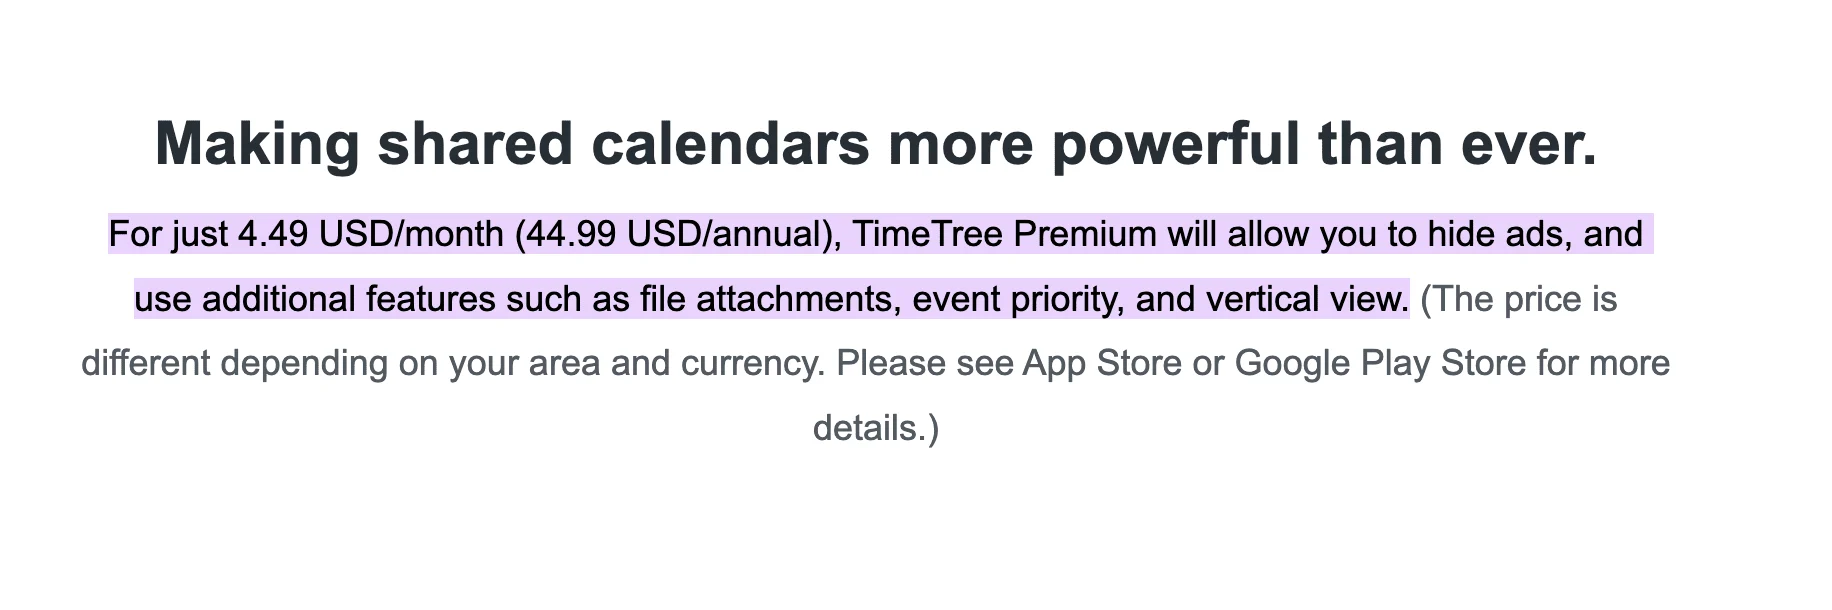 Timetree Calendar Pricing